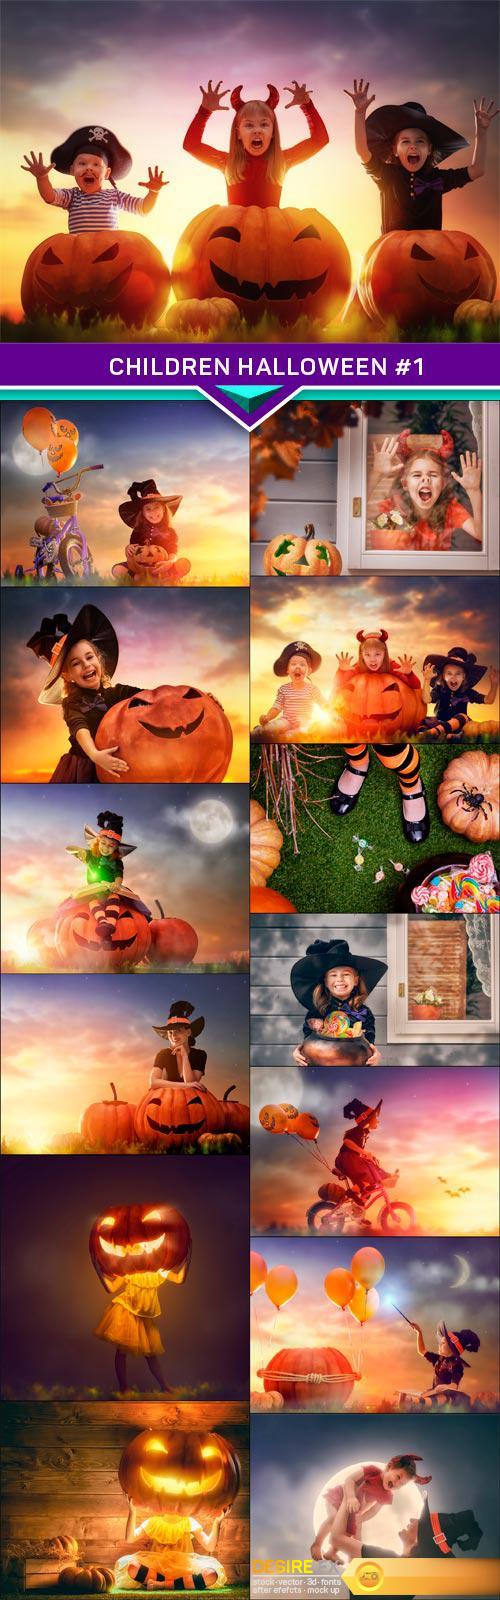 Children Halloween #1 14X JPEG